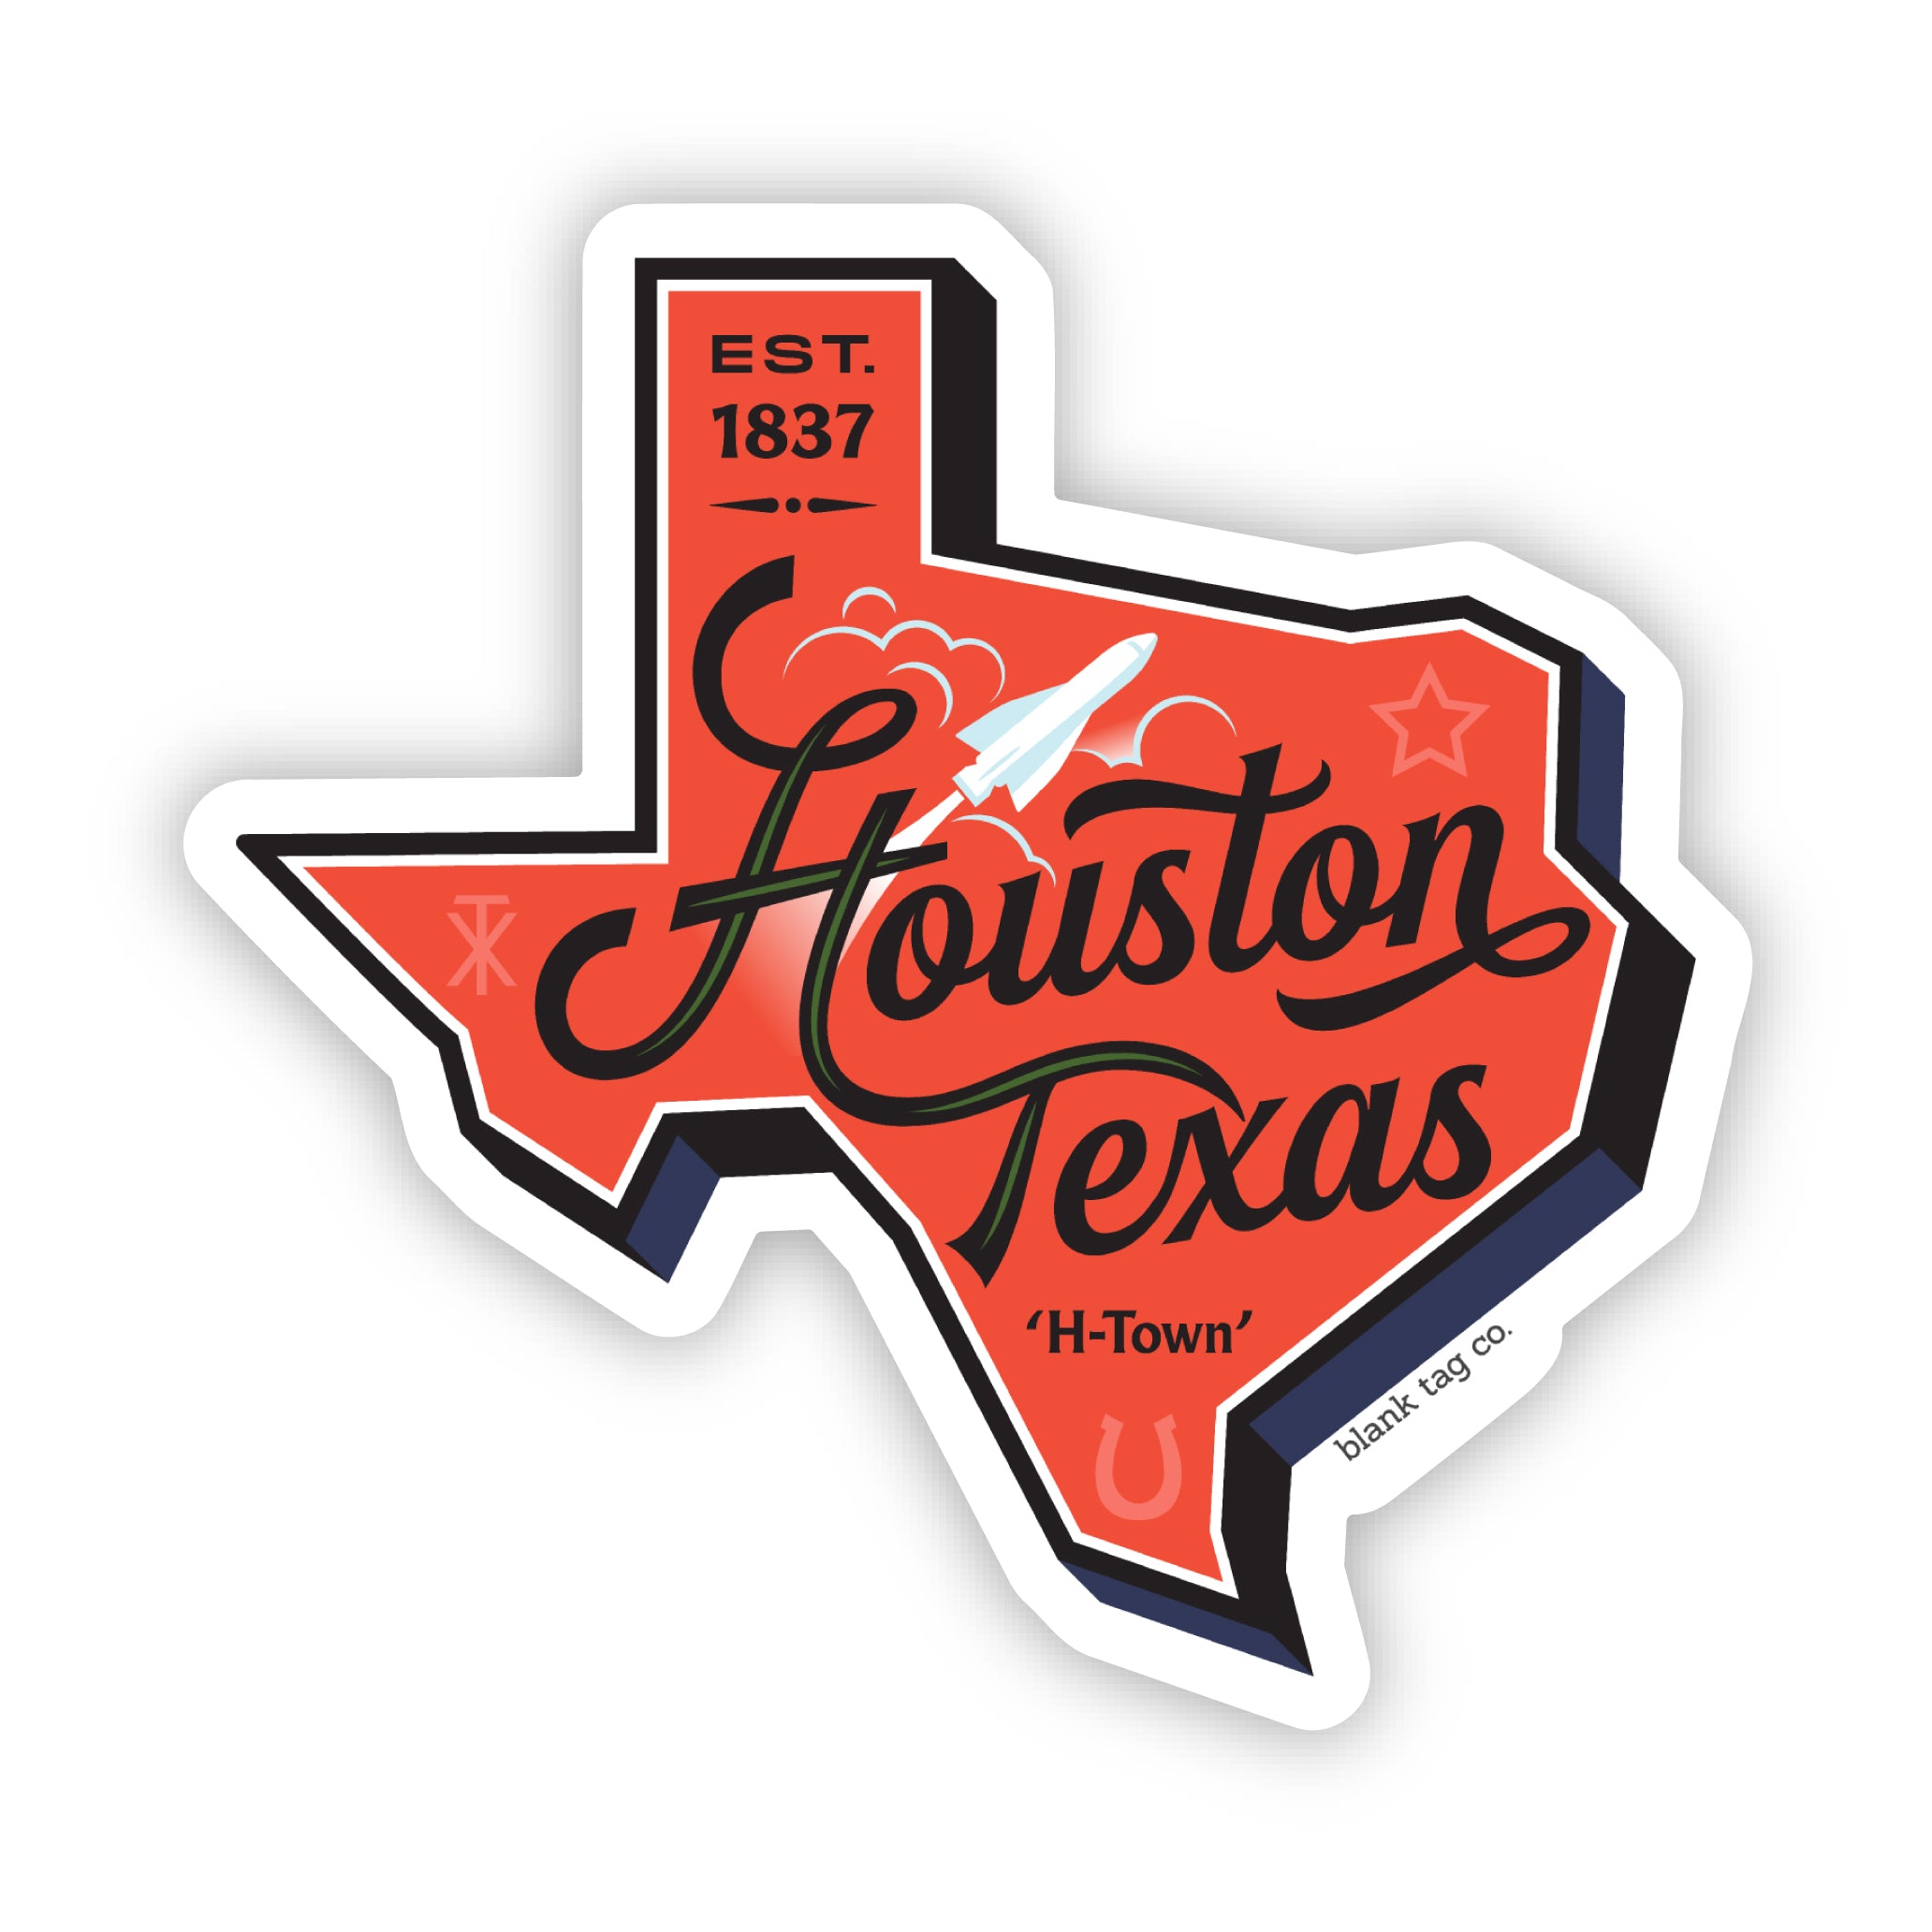 The Houston City Badge Sticker